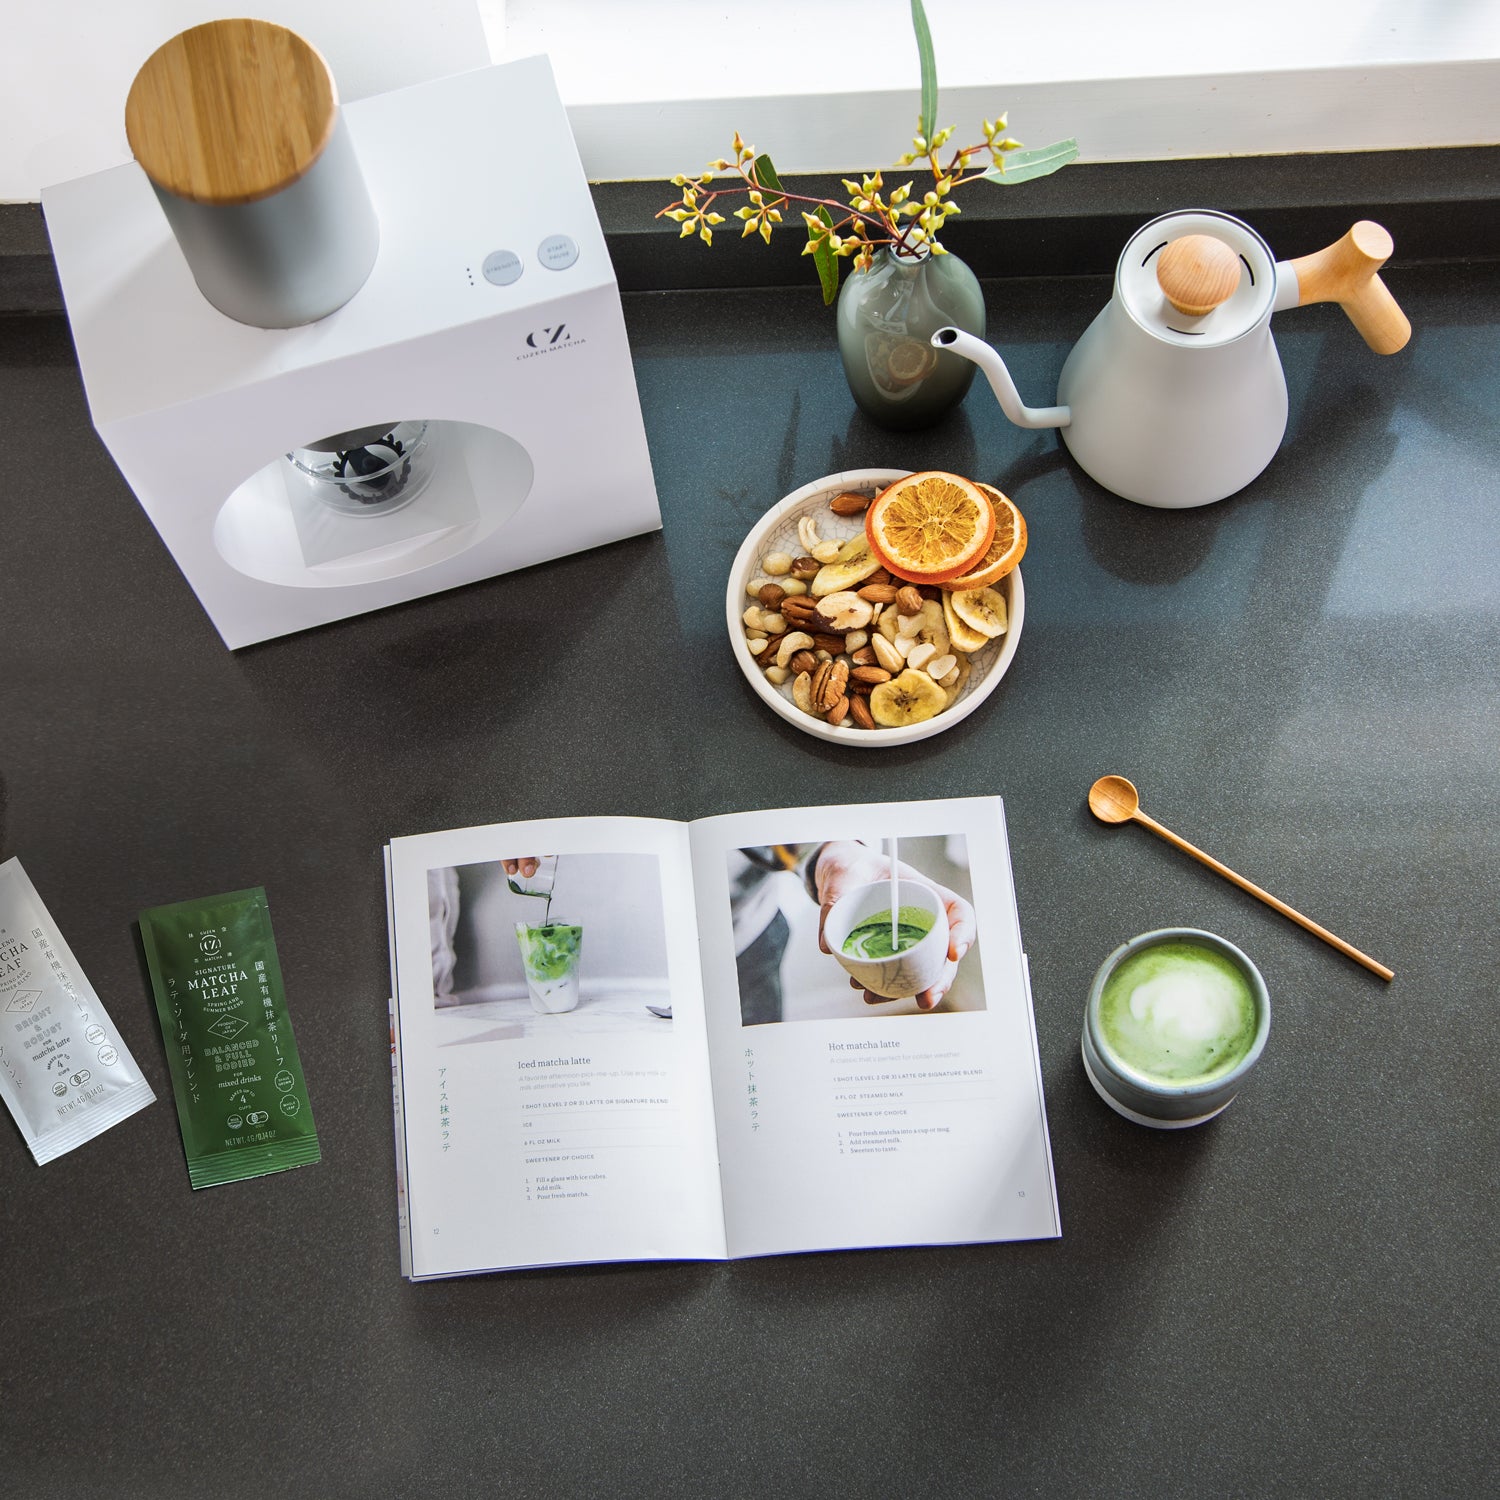 Cuzen Matcha | Matcha Maker, a booklet, leaf packets and matcha latte on kitchen counter